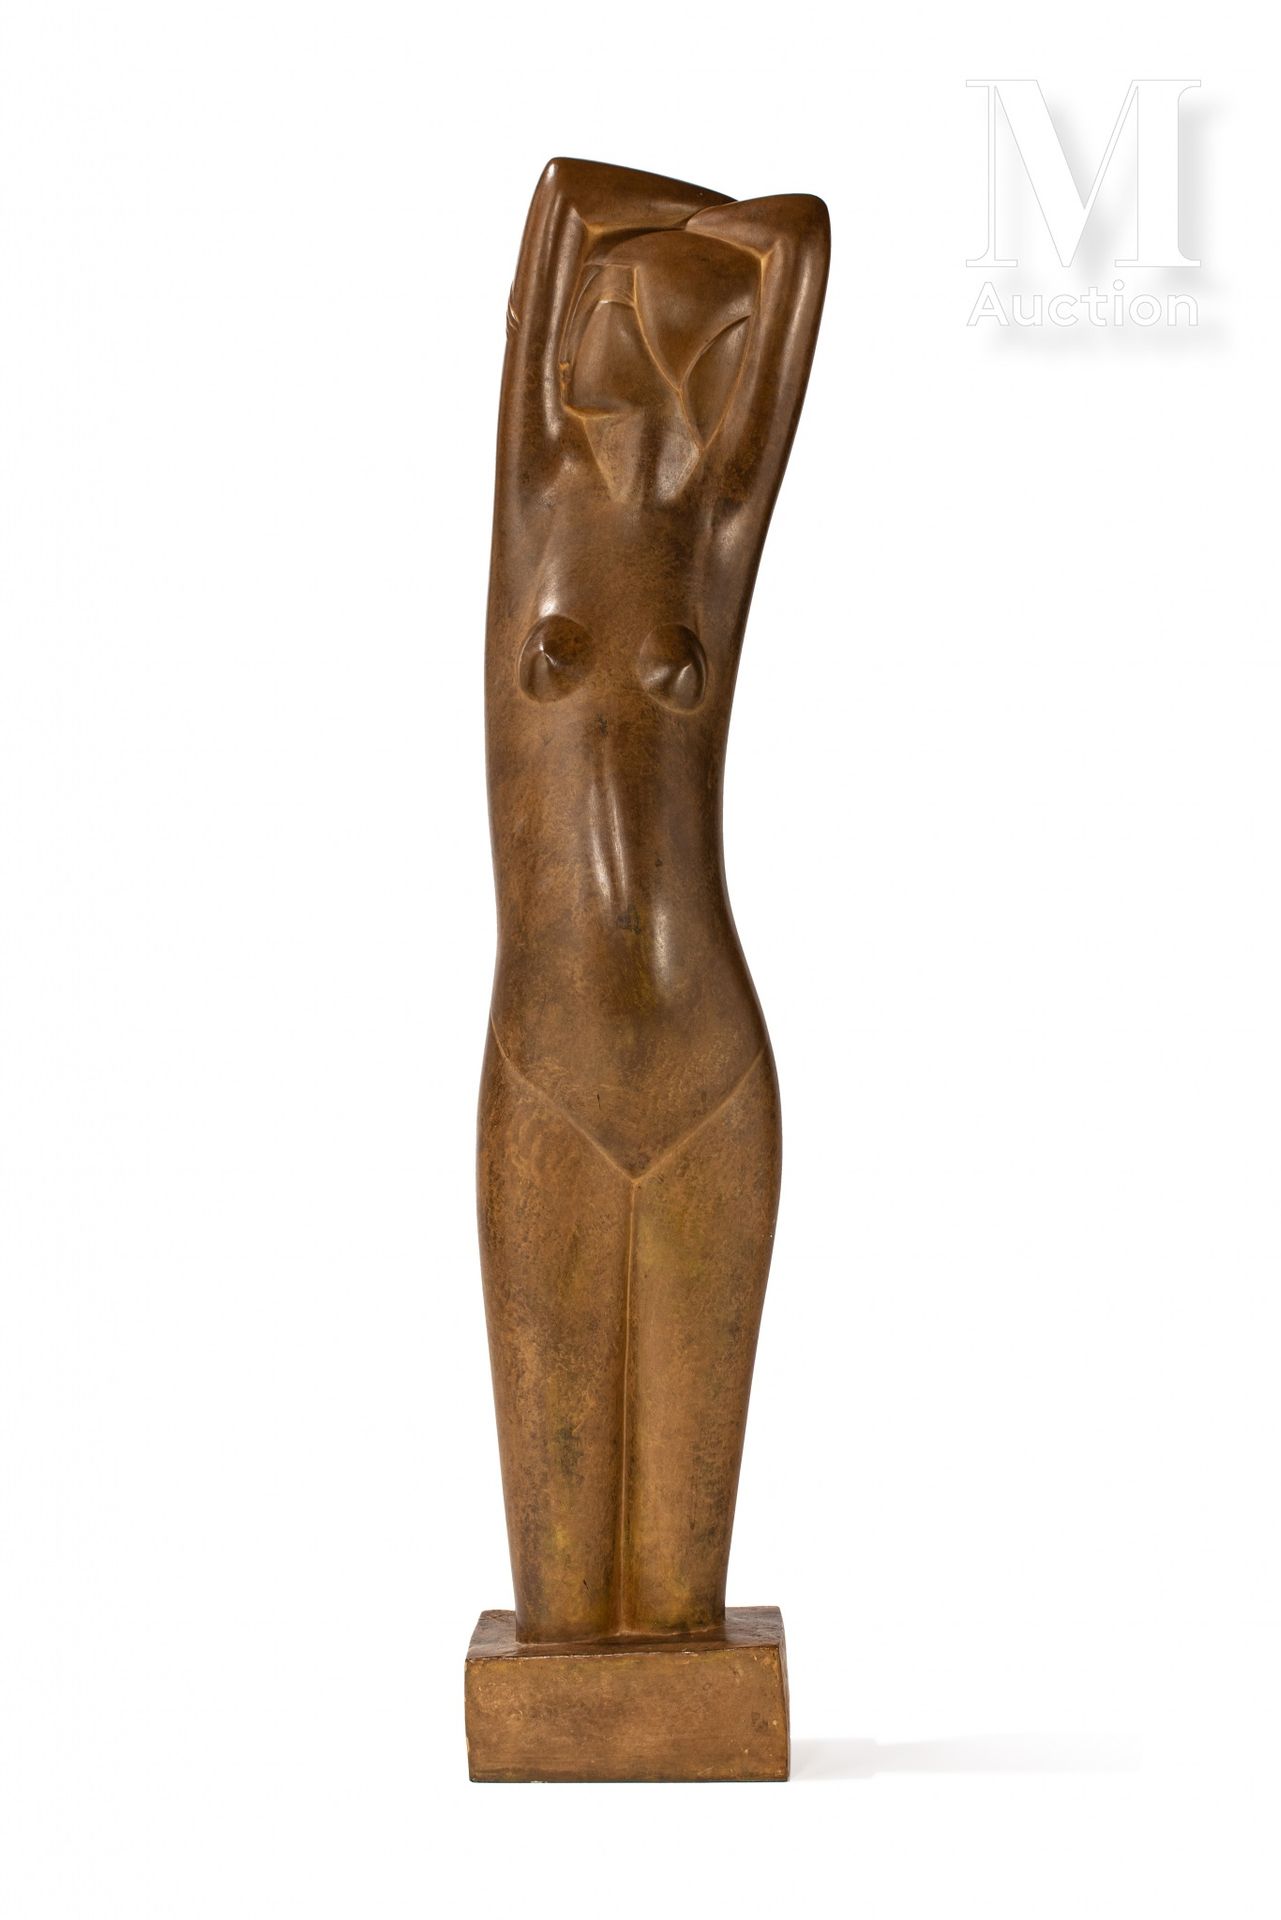 Chana ORLOFF (1888 - 1968) Torse

Chana ORLOFF (1888 - 1968)

"Torse"

Sculpture&hellip;